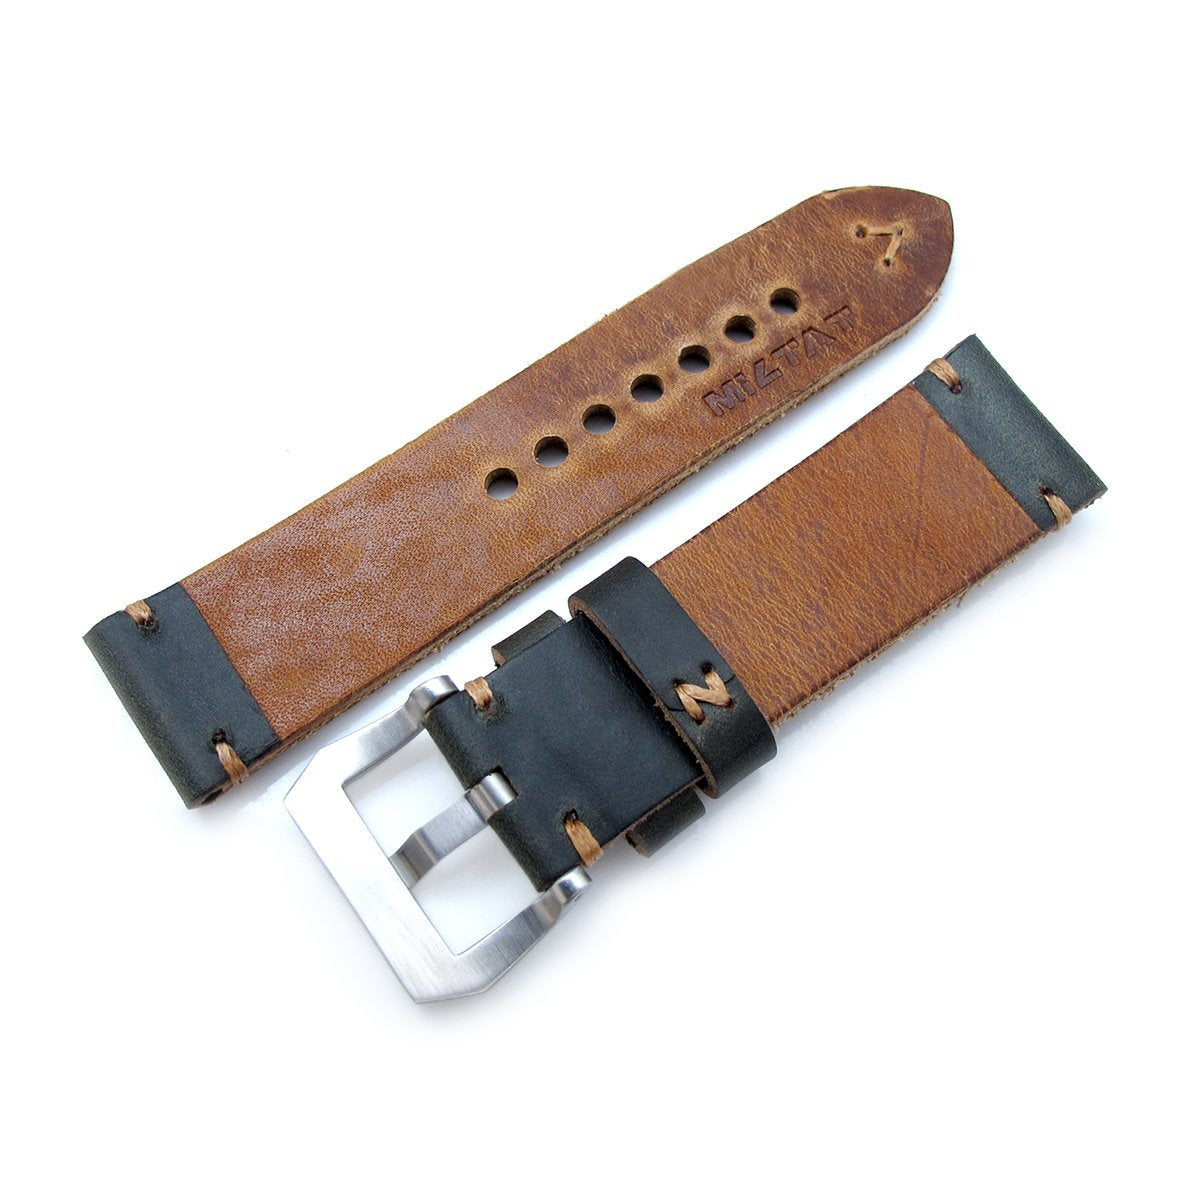 24mm MiLTAT Horween Chromexcel Watch Strap Blackish Green Brown Stitching Strapcode Watch Bands